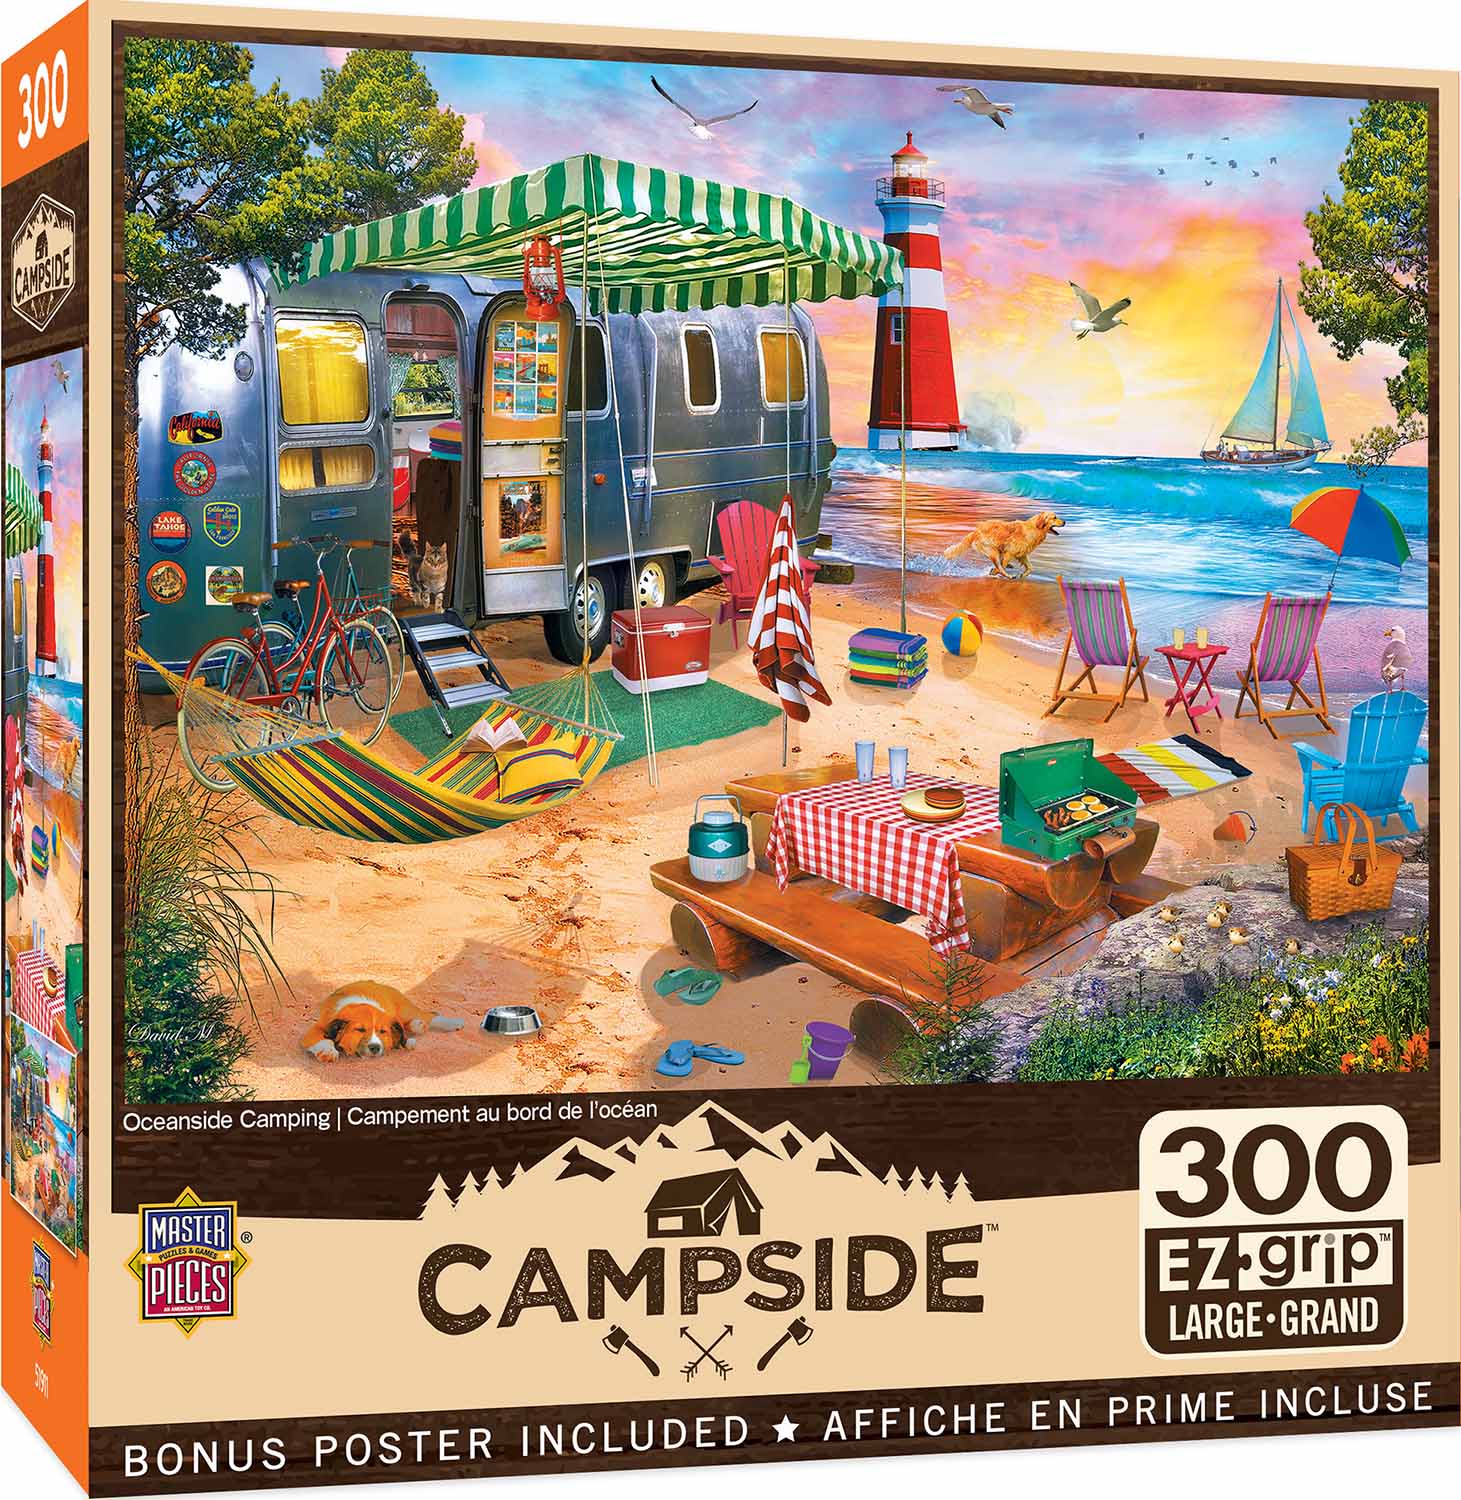 Campside - Oceanside Camping